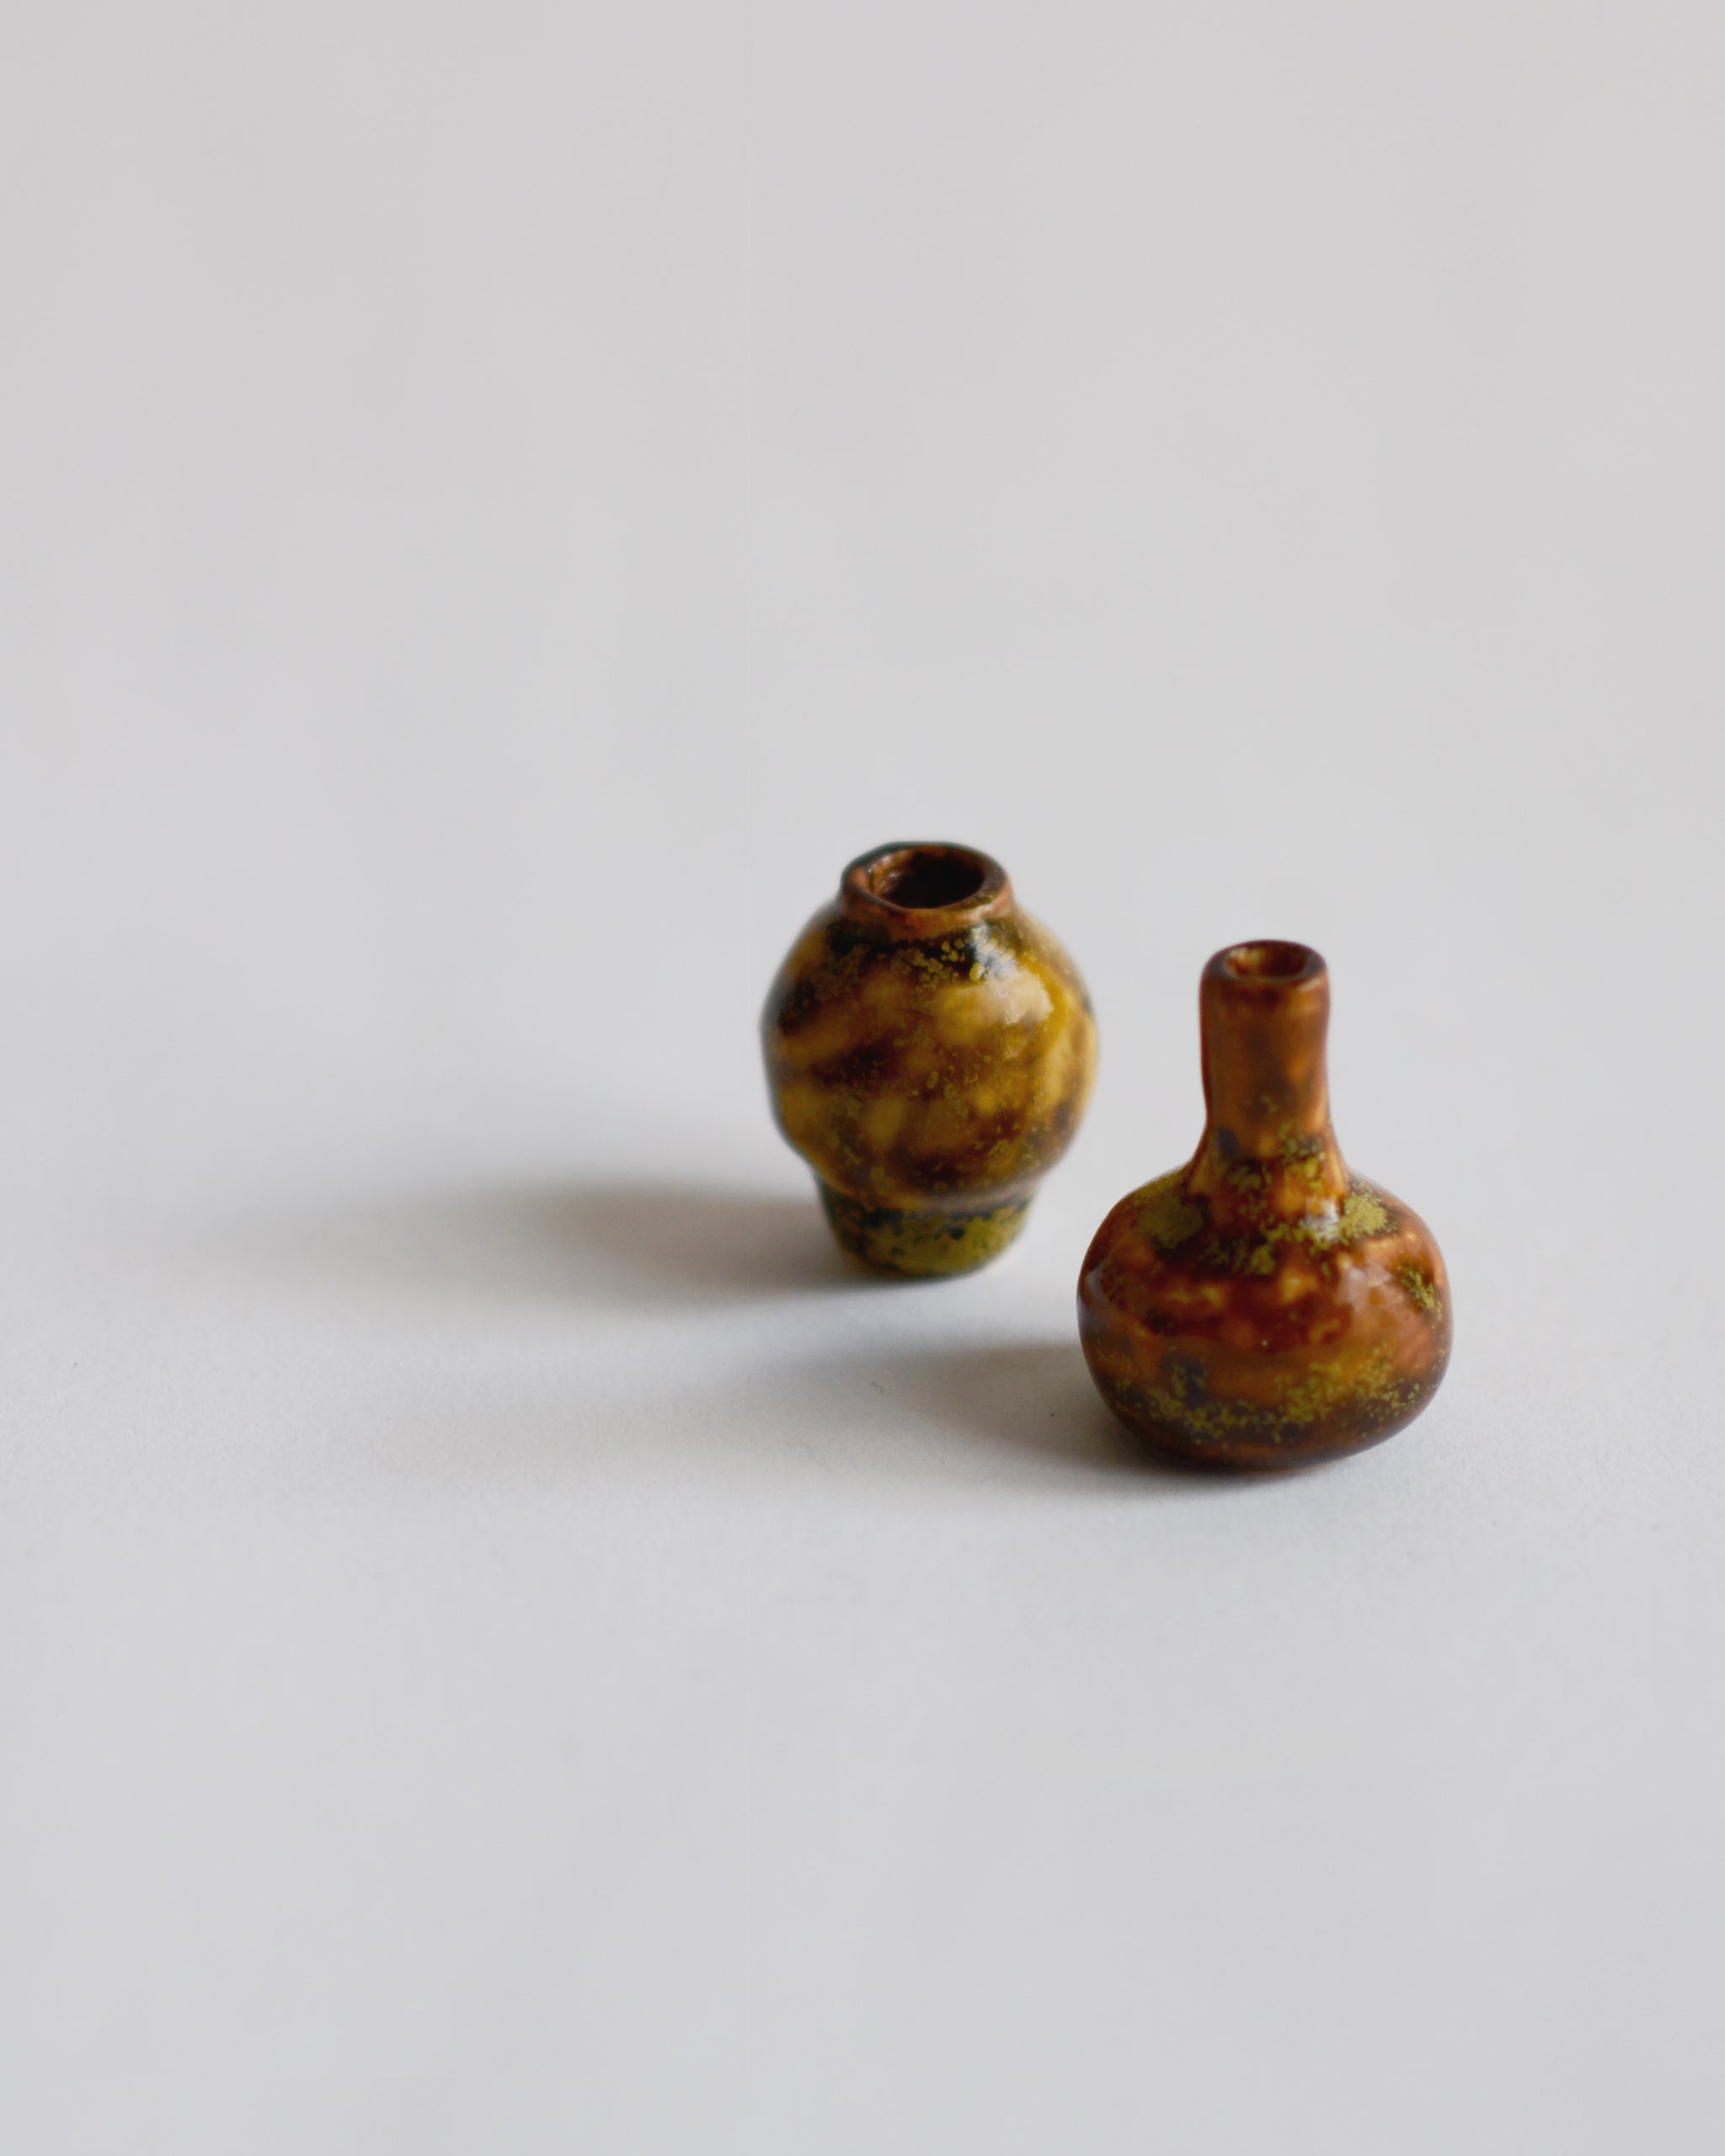  Angled view of 2 brown glazed mini vases from the Mini Vase Set -Duo II by Dani Sujin x Nalata Nalata against white-gray background.